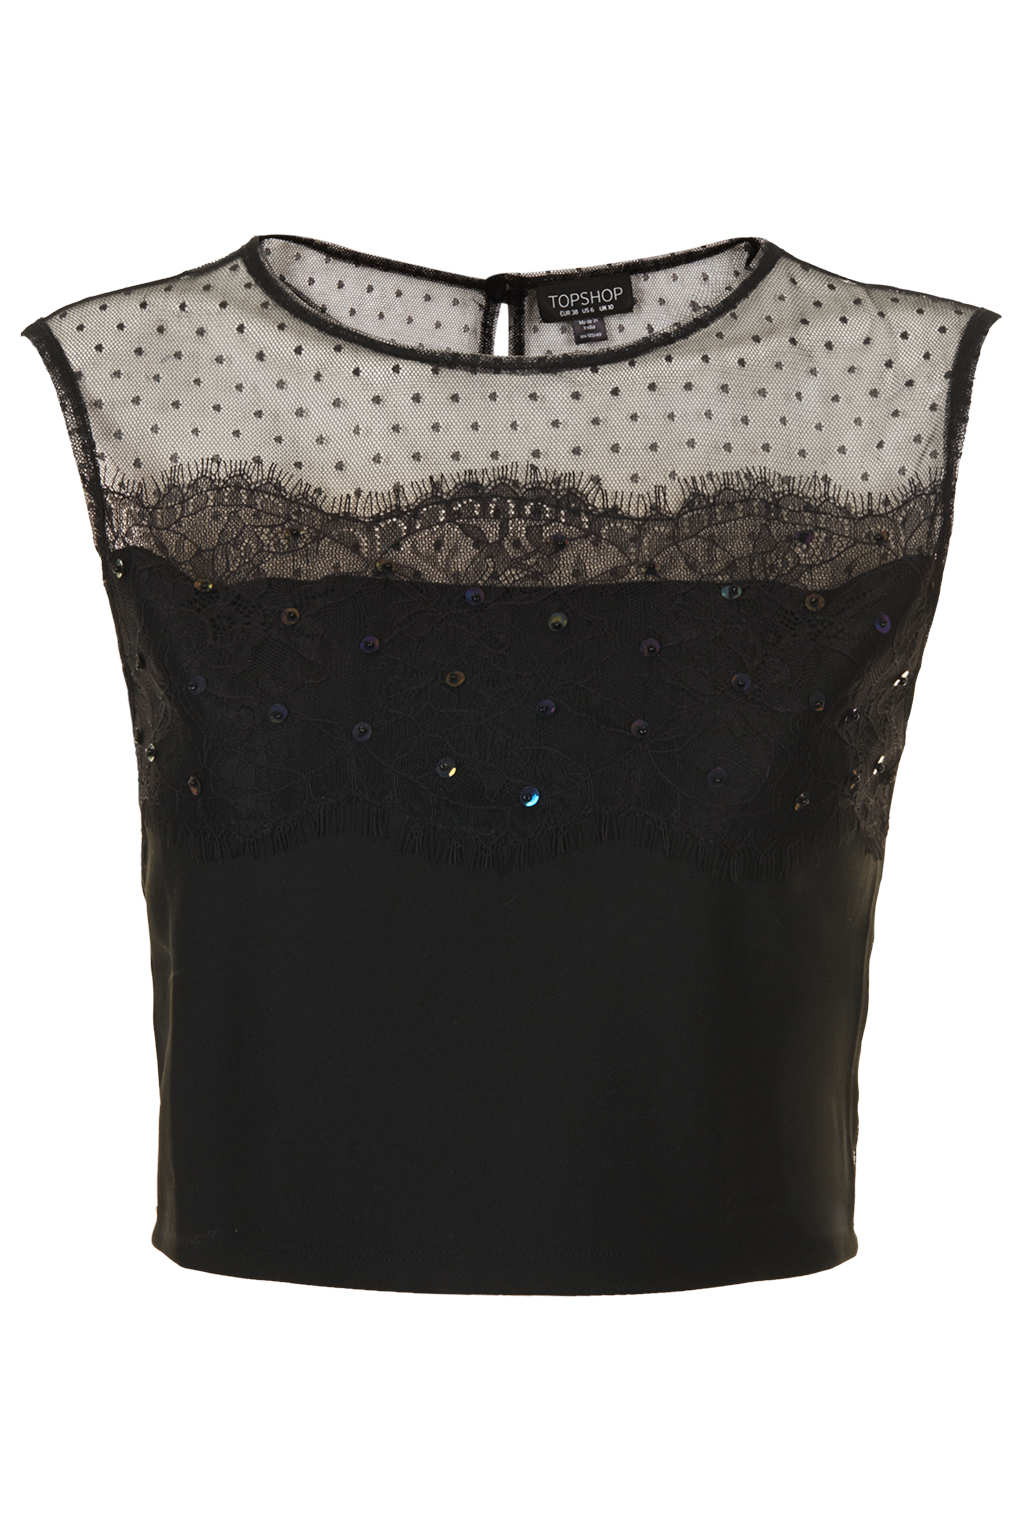 Topshop Sequin Lace Panel Crop Top in Black | Lyst